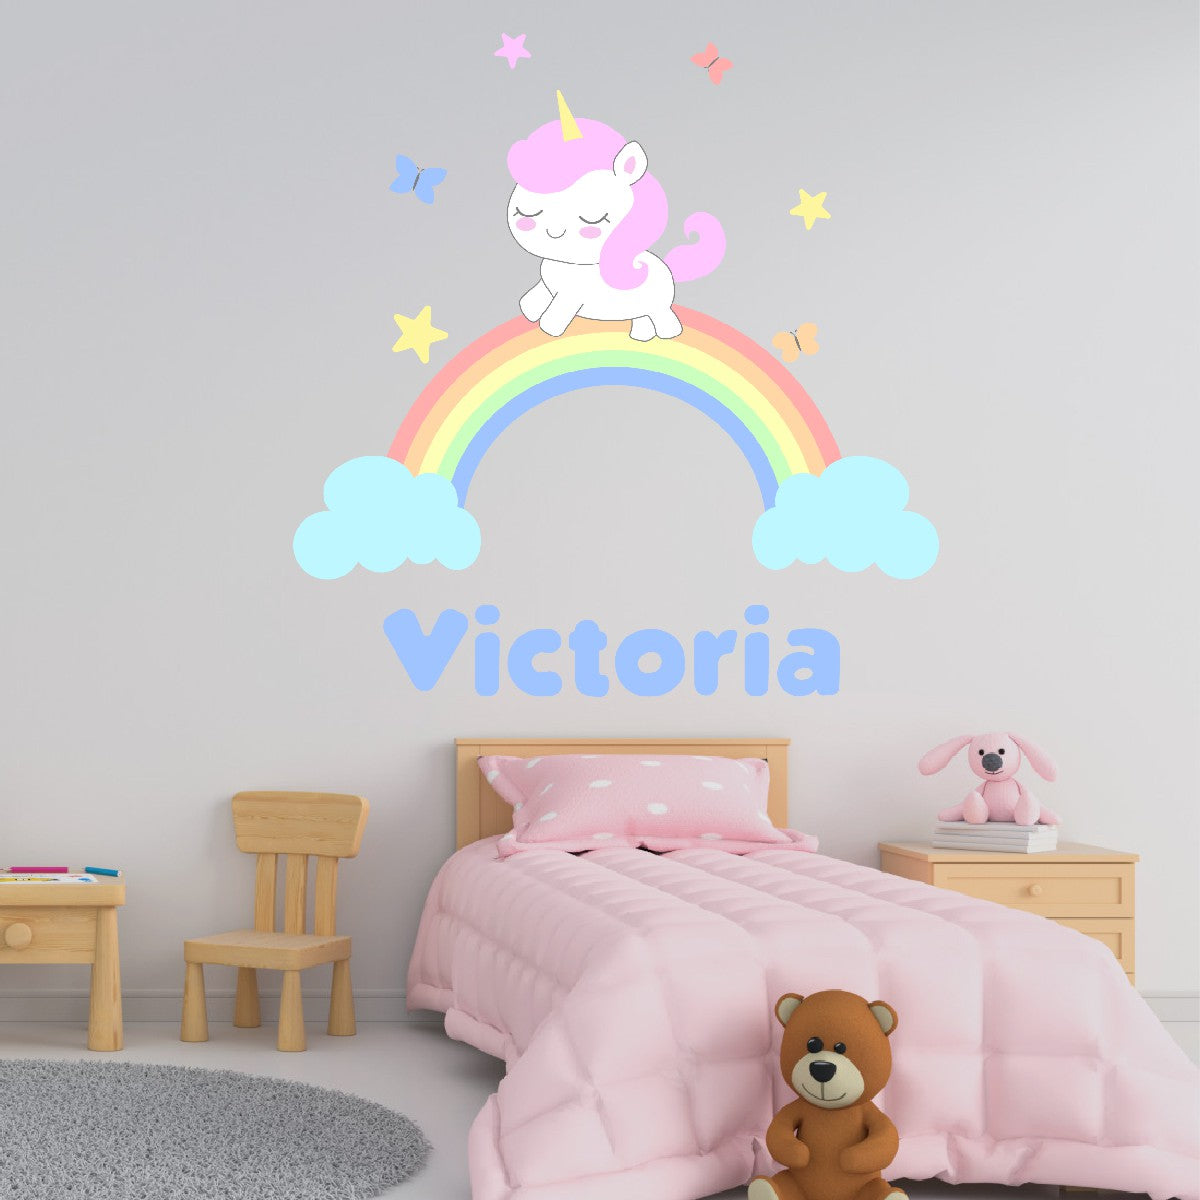 Custom Rainbow Wall Sticker - Little Unicorn on a Rainbow with Flying Butterflies Sticker - Wall Stickers for Boho Nursery - Rainbow Decor for Girls Bedroom